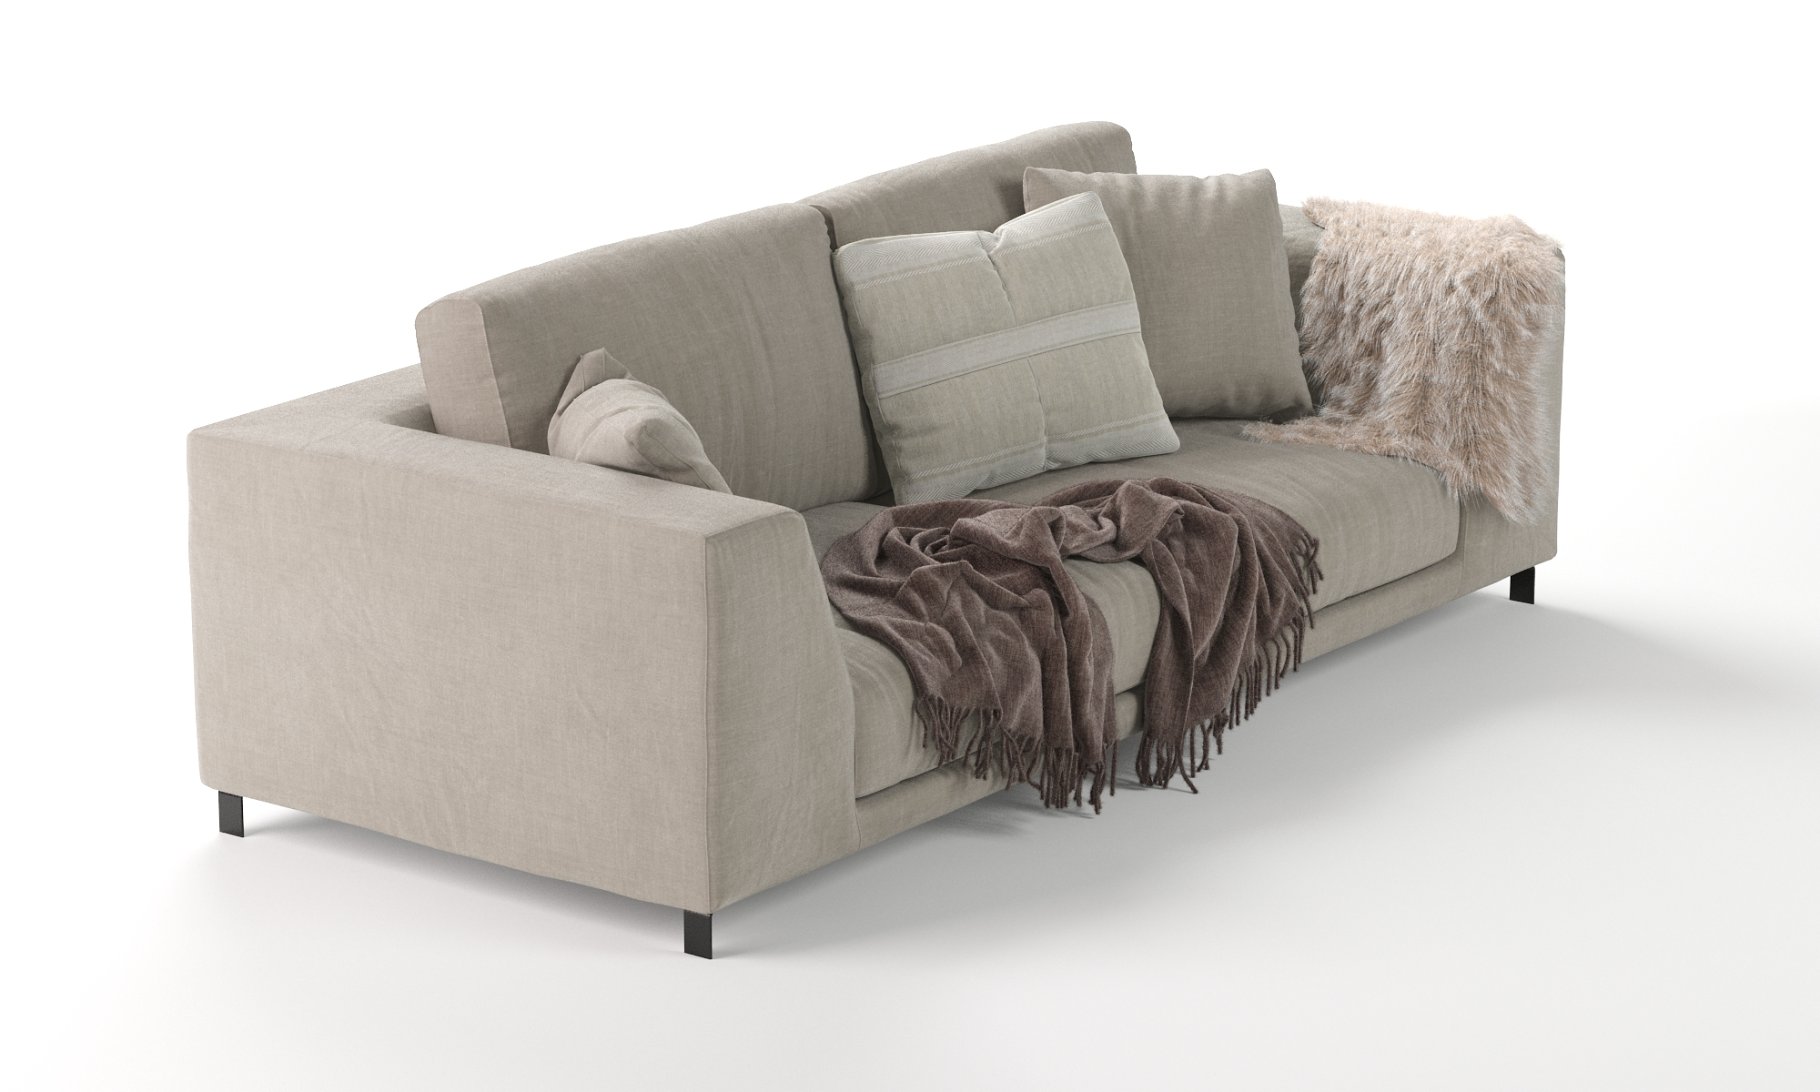 Rendering of an elegant 3d model of a sofa